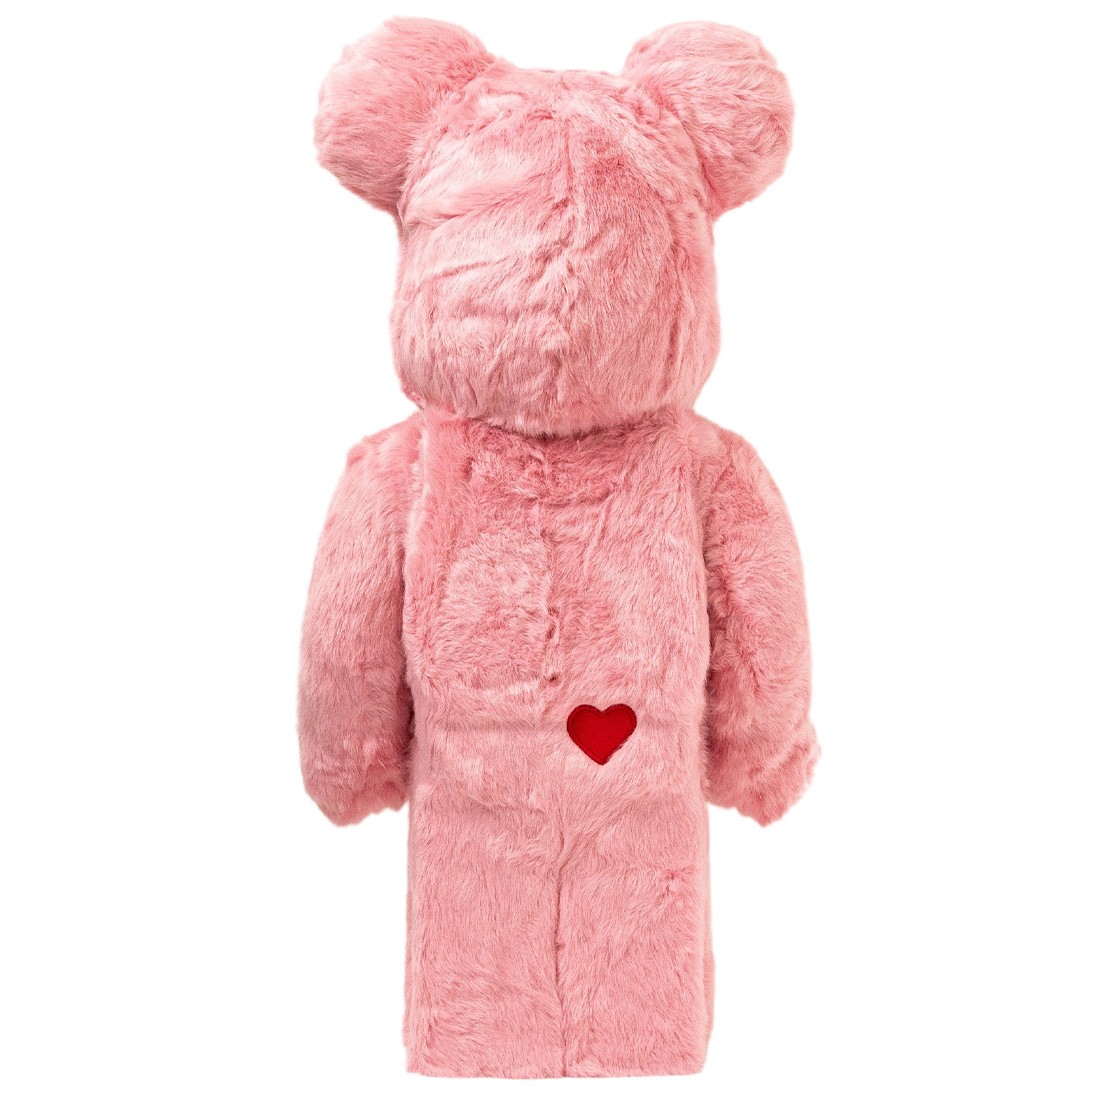 Medicom Care Bears Cheer Bear Costume Ver. 1000% Bearbrick Figure (pink)